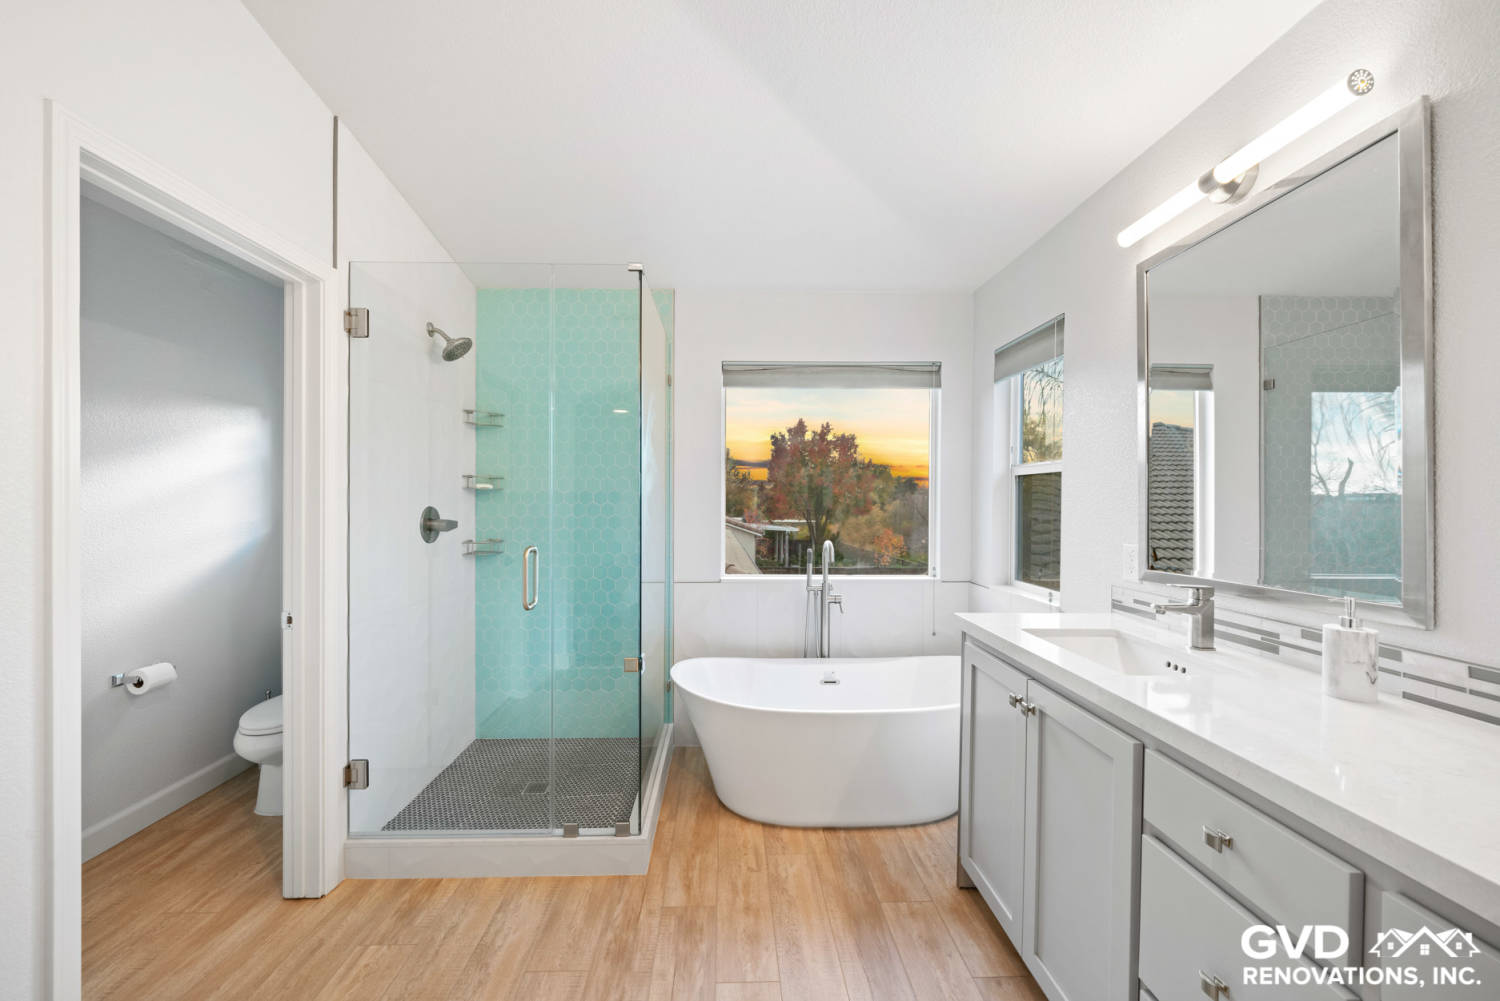 Average Cost Of A Bathroom Remodel, Bathroom Remodel Cost Bay Area